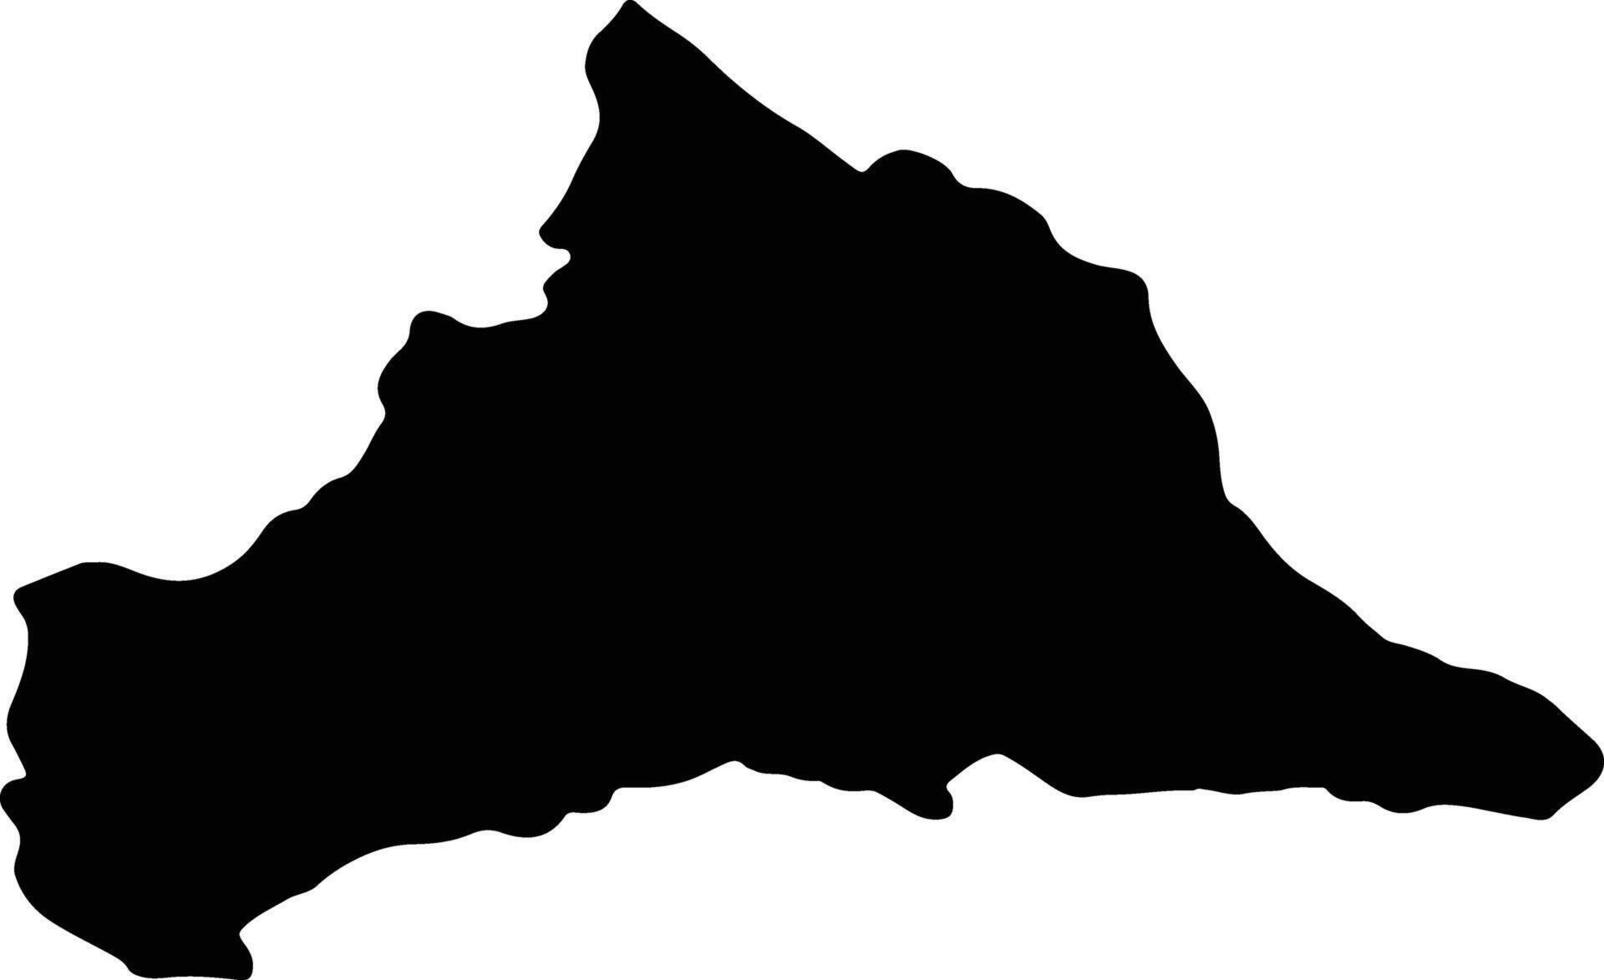 Cerro Largo Uruguay silhouette map vector